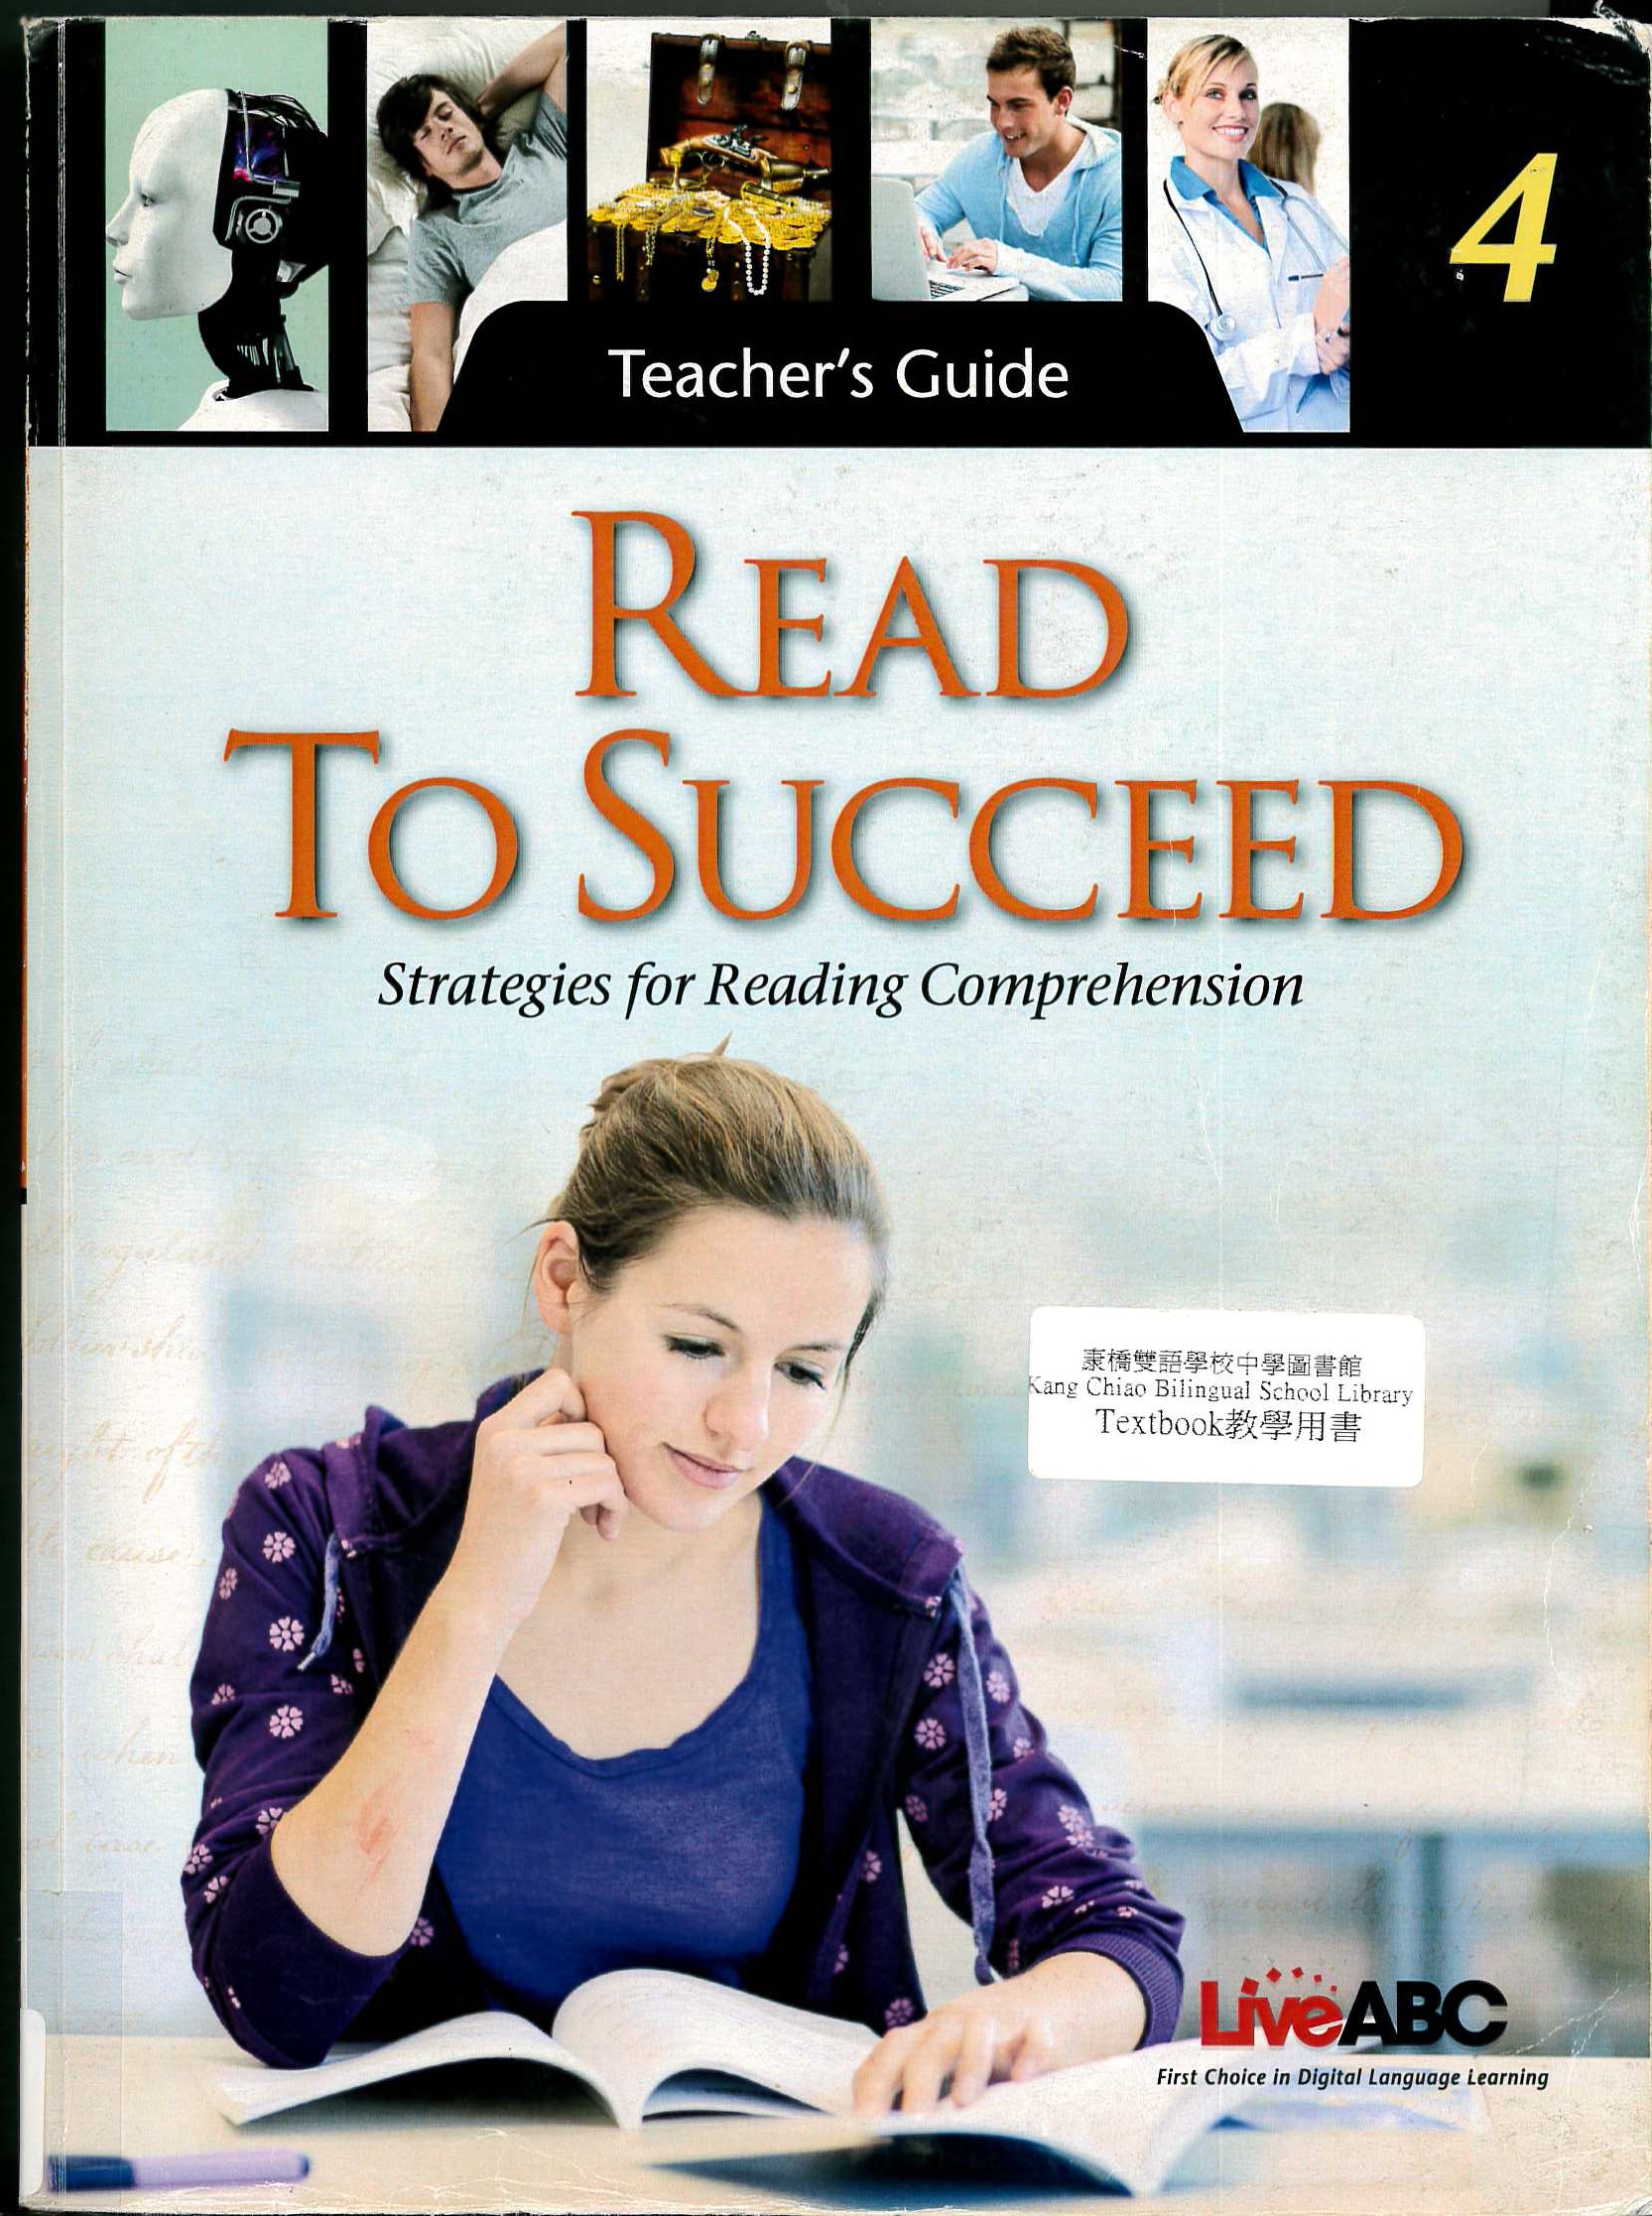 Read to succeed (4) [Teacher